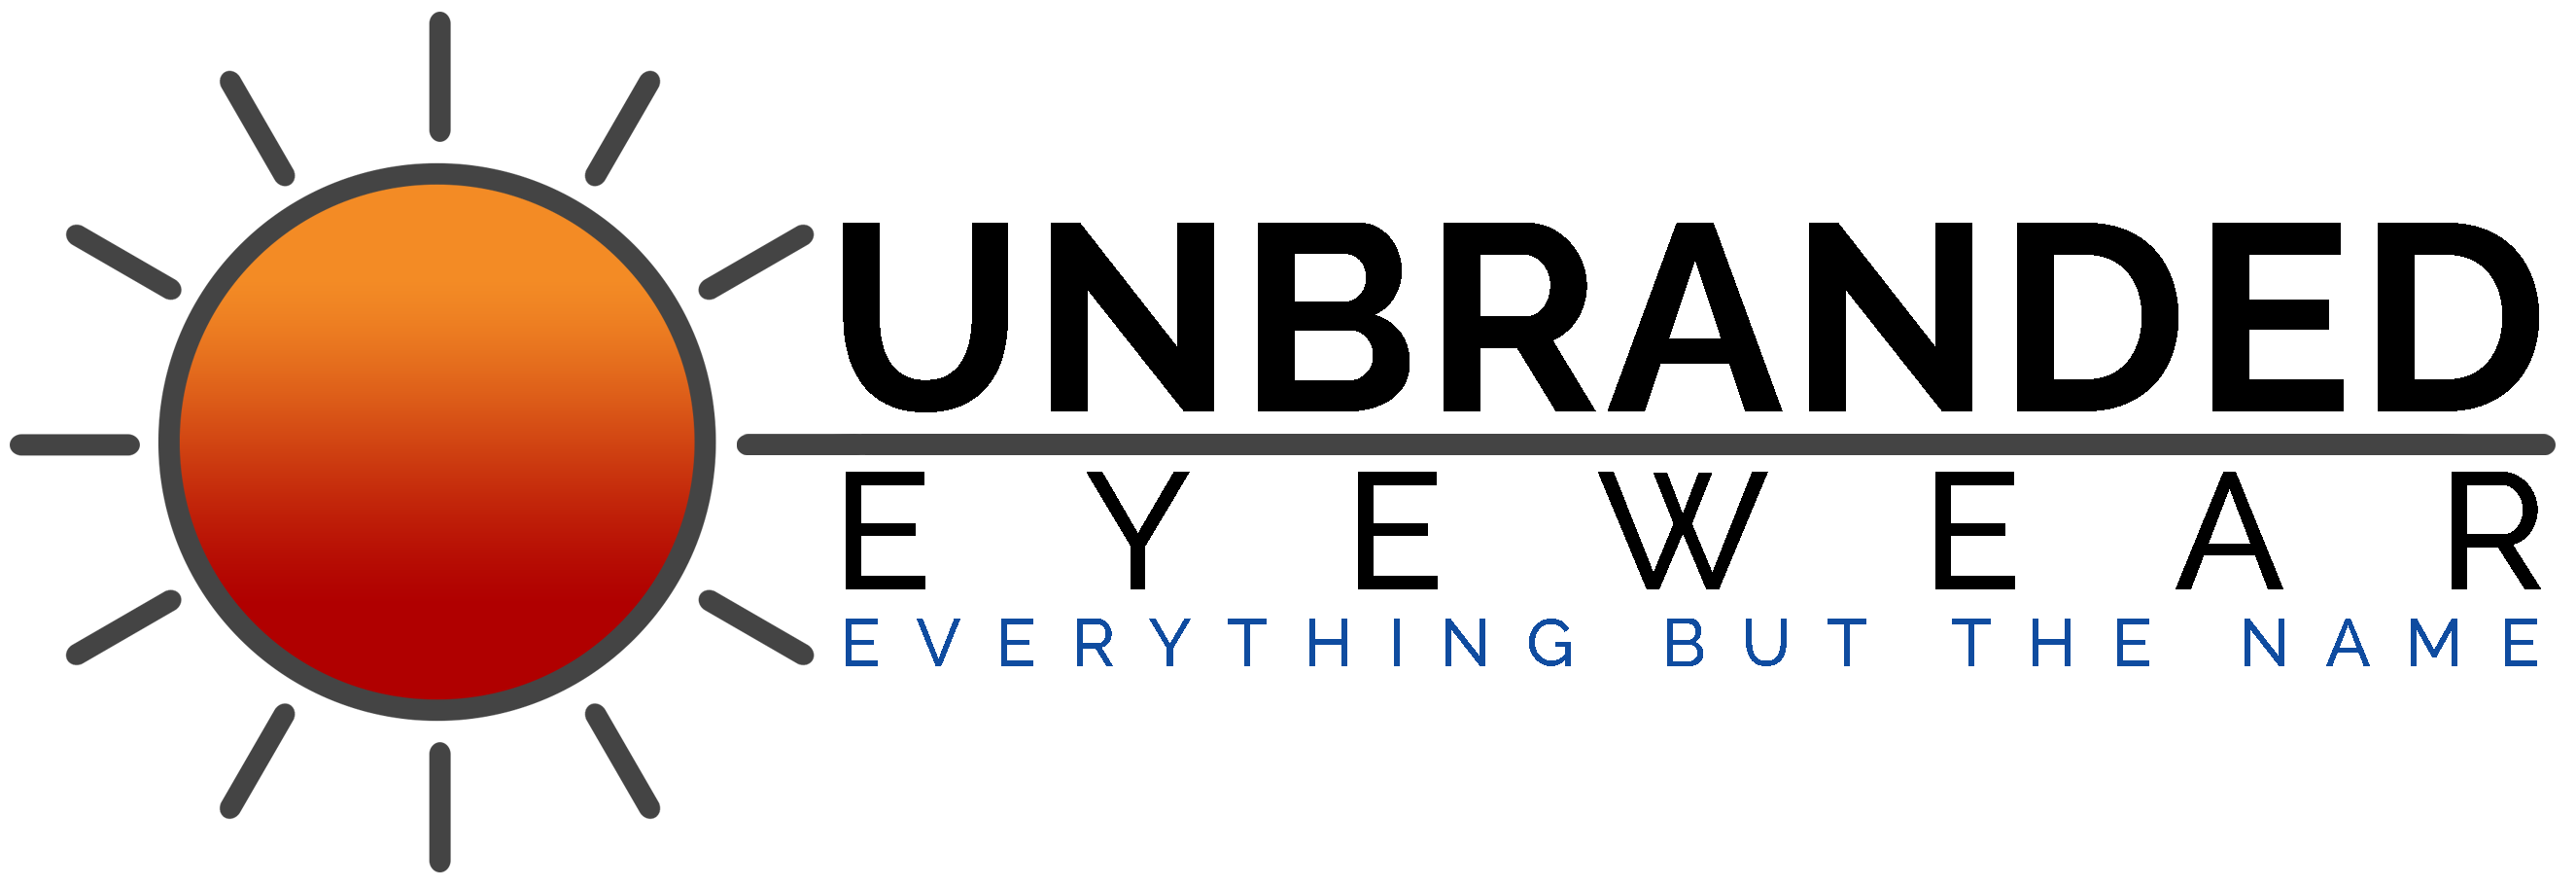 unbranded-eyewear-logo